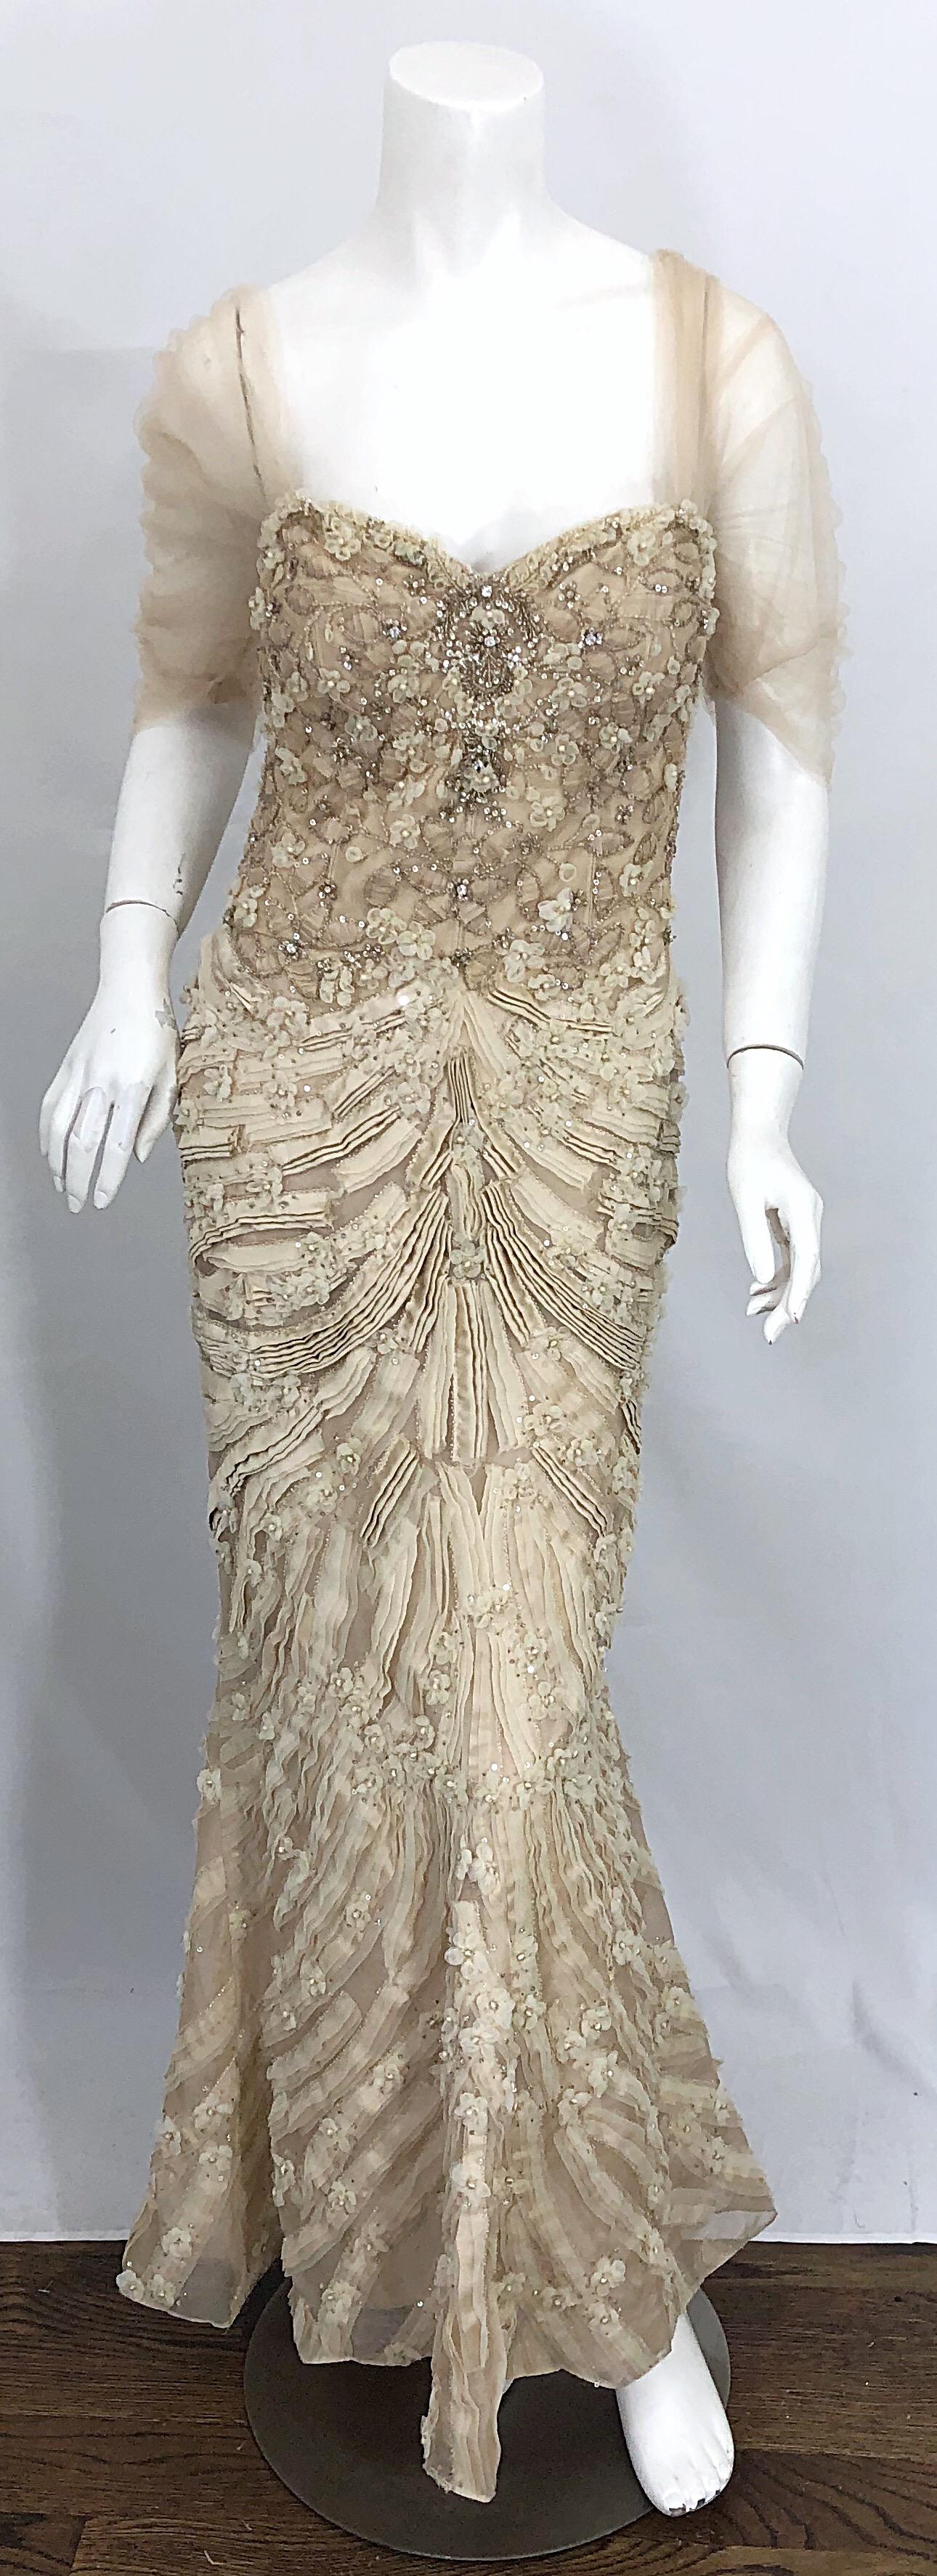 Monique Lhuillier Couture Size 10 / 12 Beige Rhinestone Beaded $12, 000 Silk Gown 10